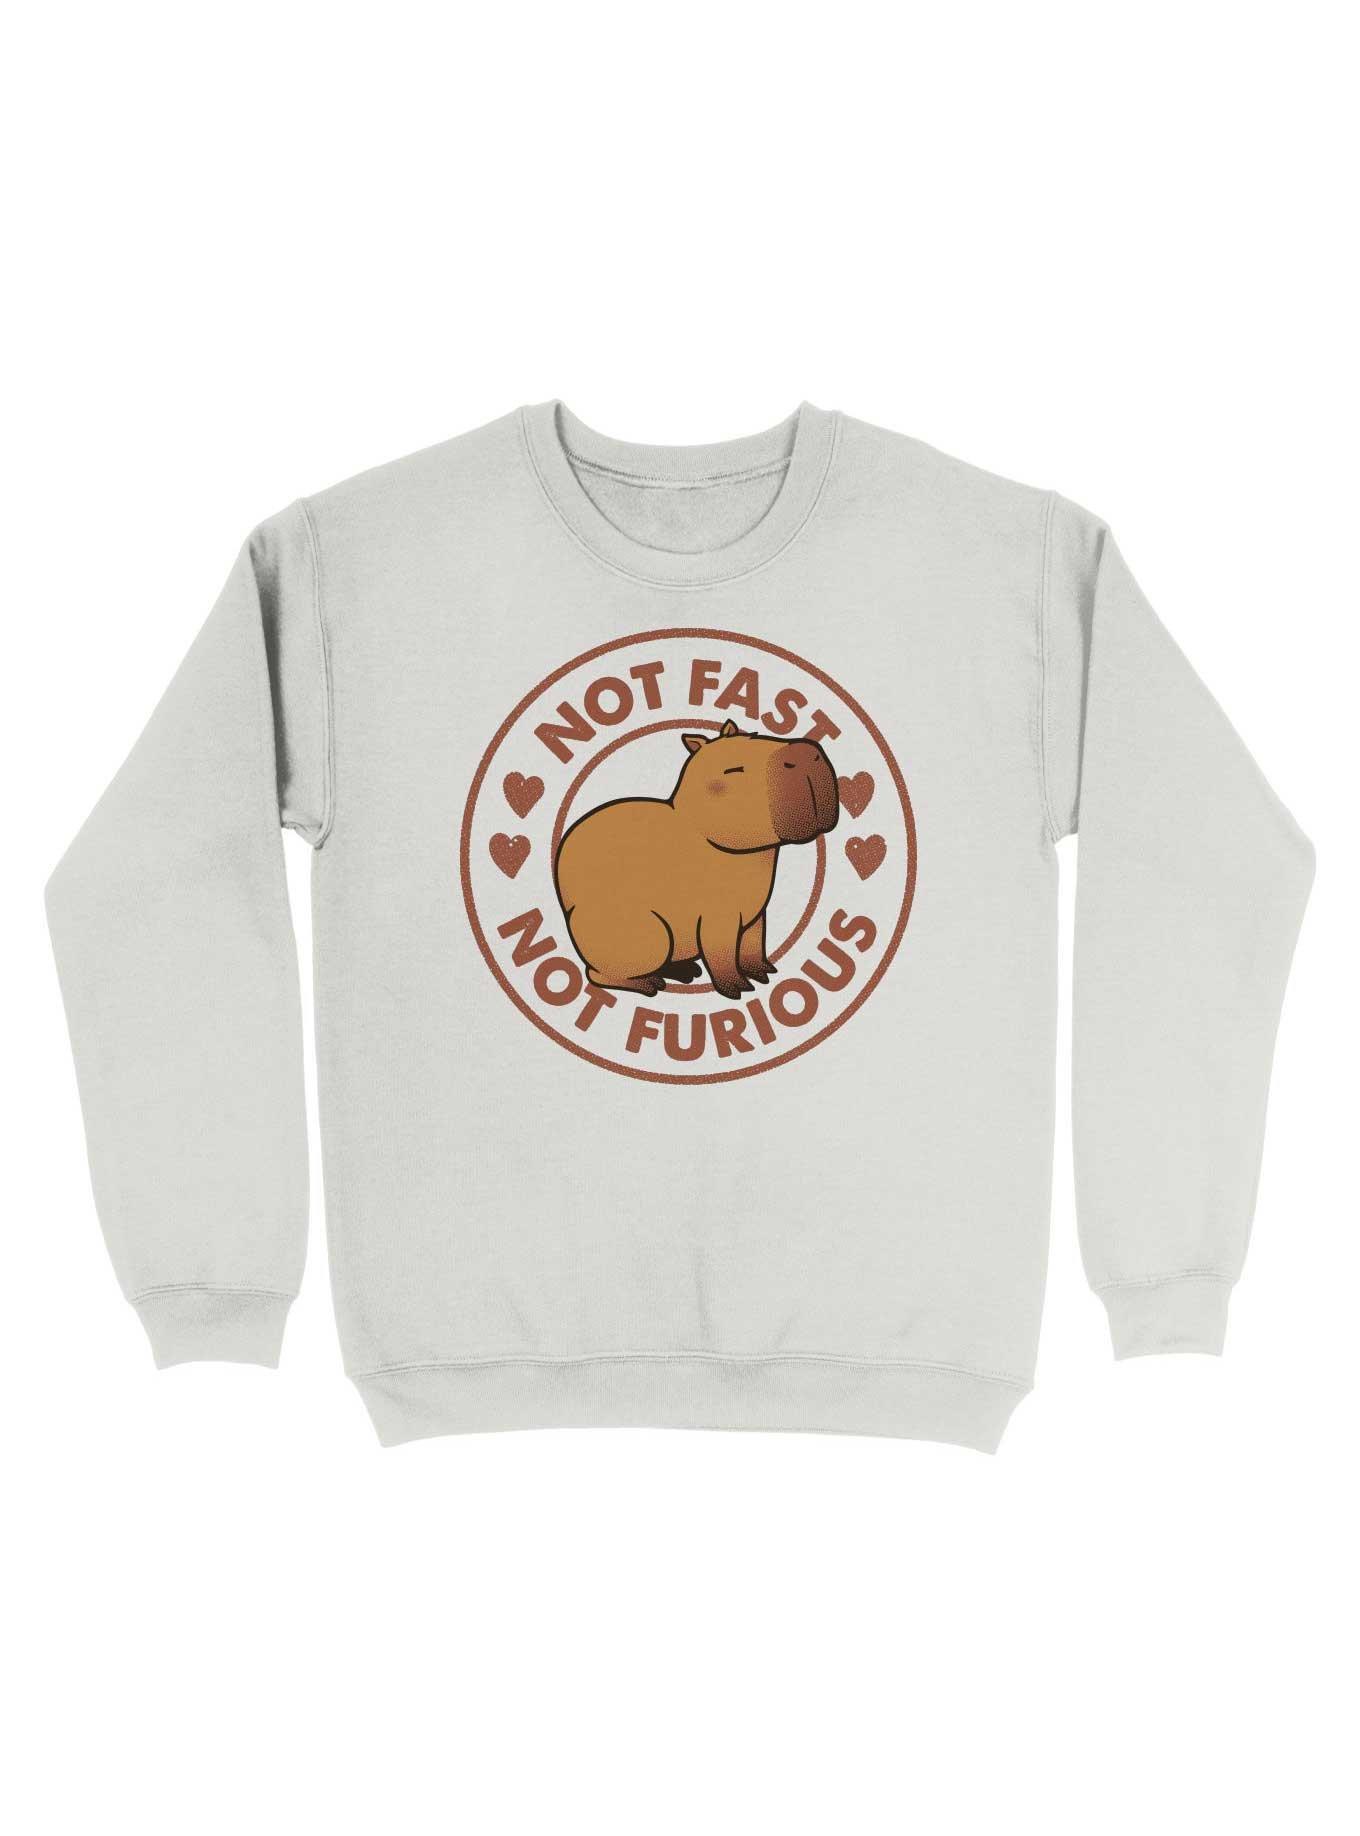 Not Fast Not Furious Capybara Sweatshirt, WHITE, hi-res